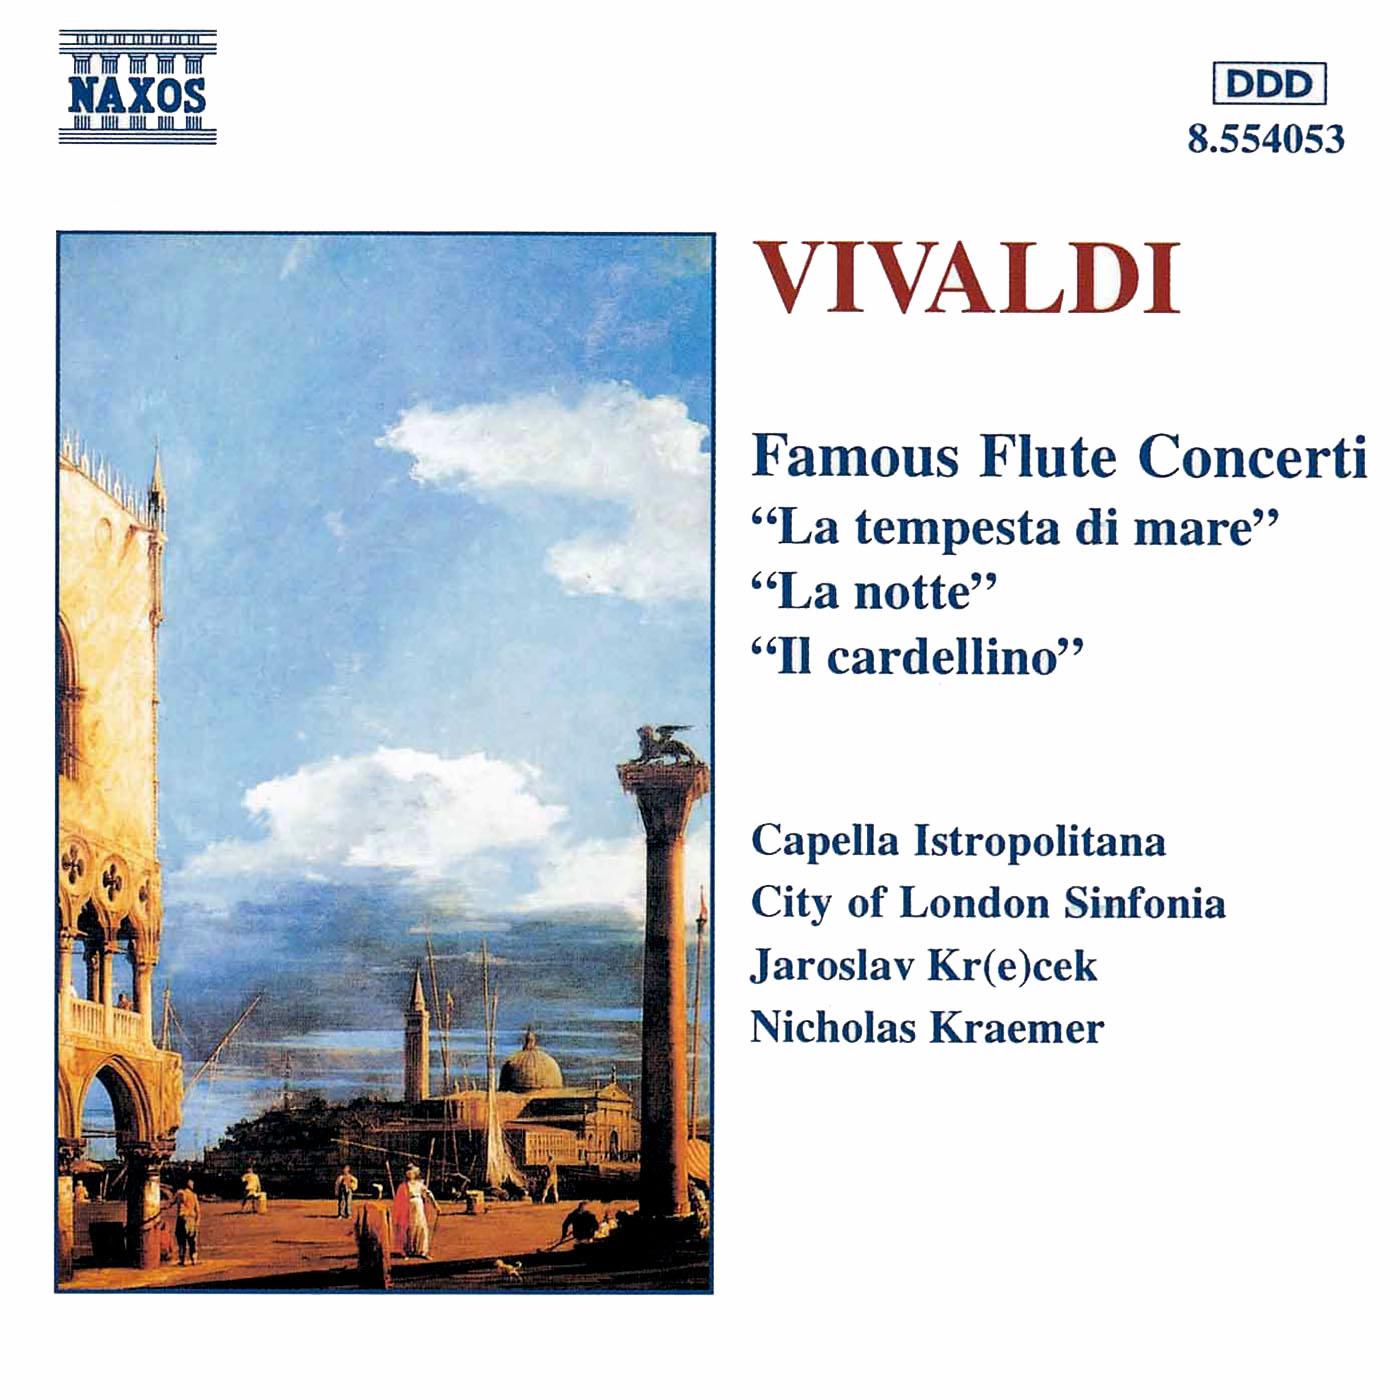 Flautino Concerto in C Major, RV 443*: II. Largo